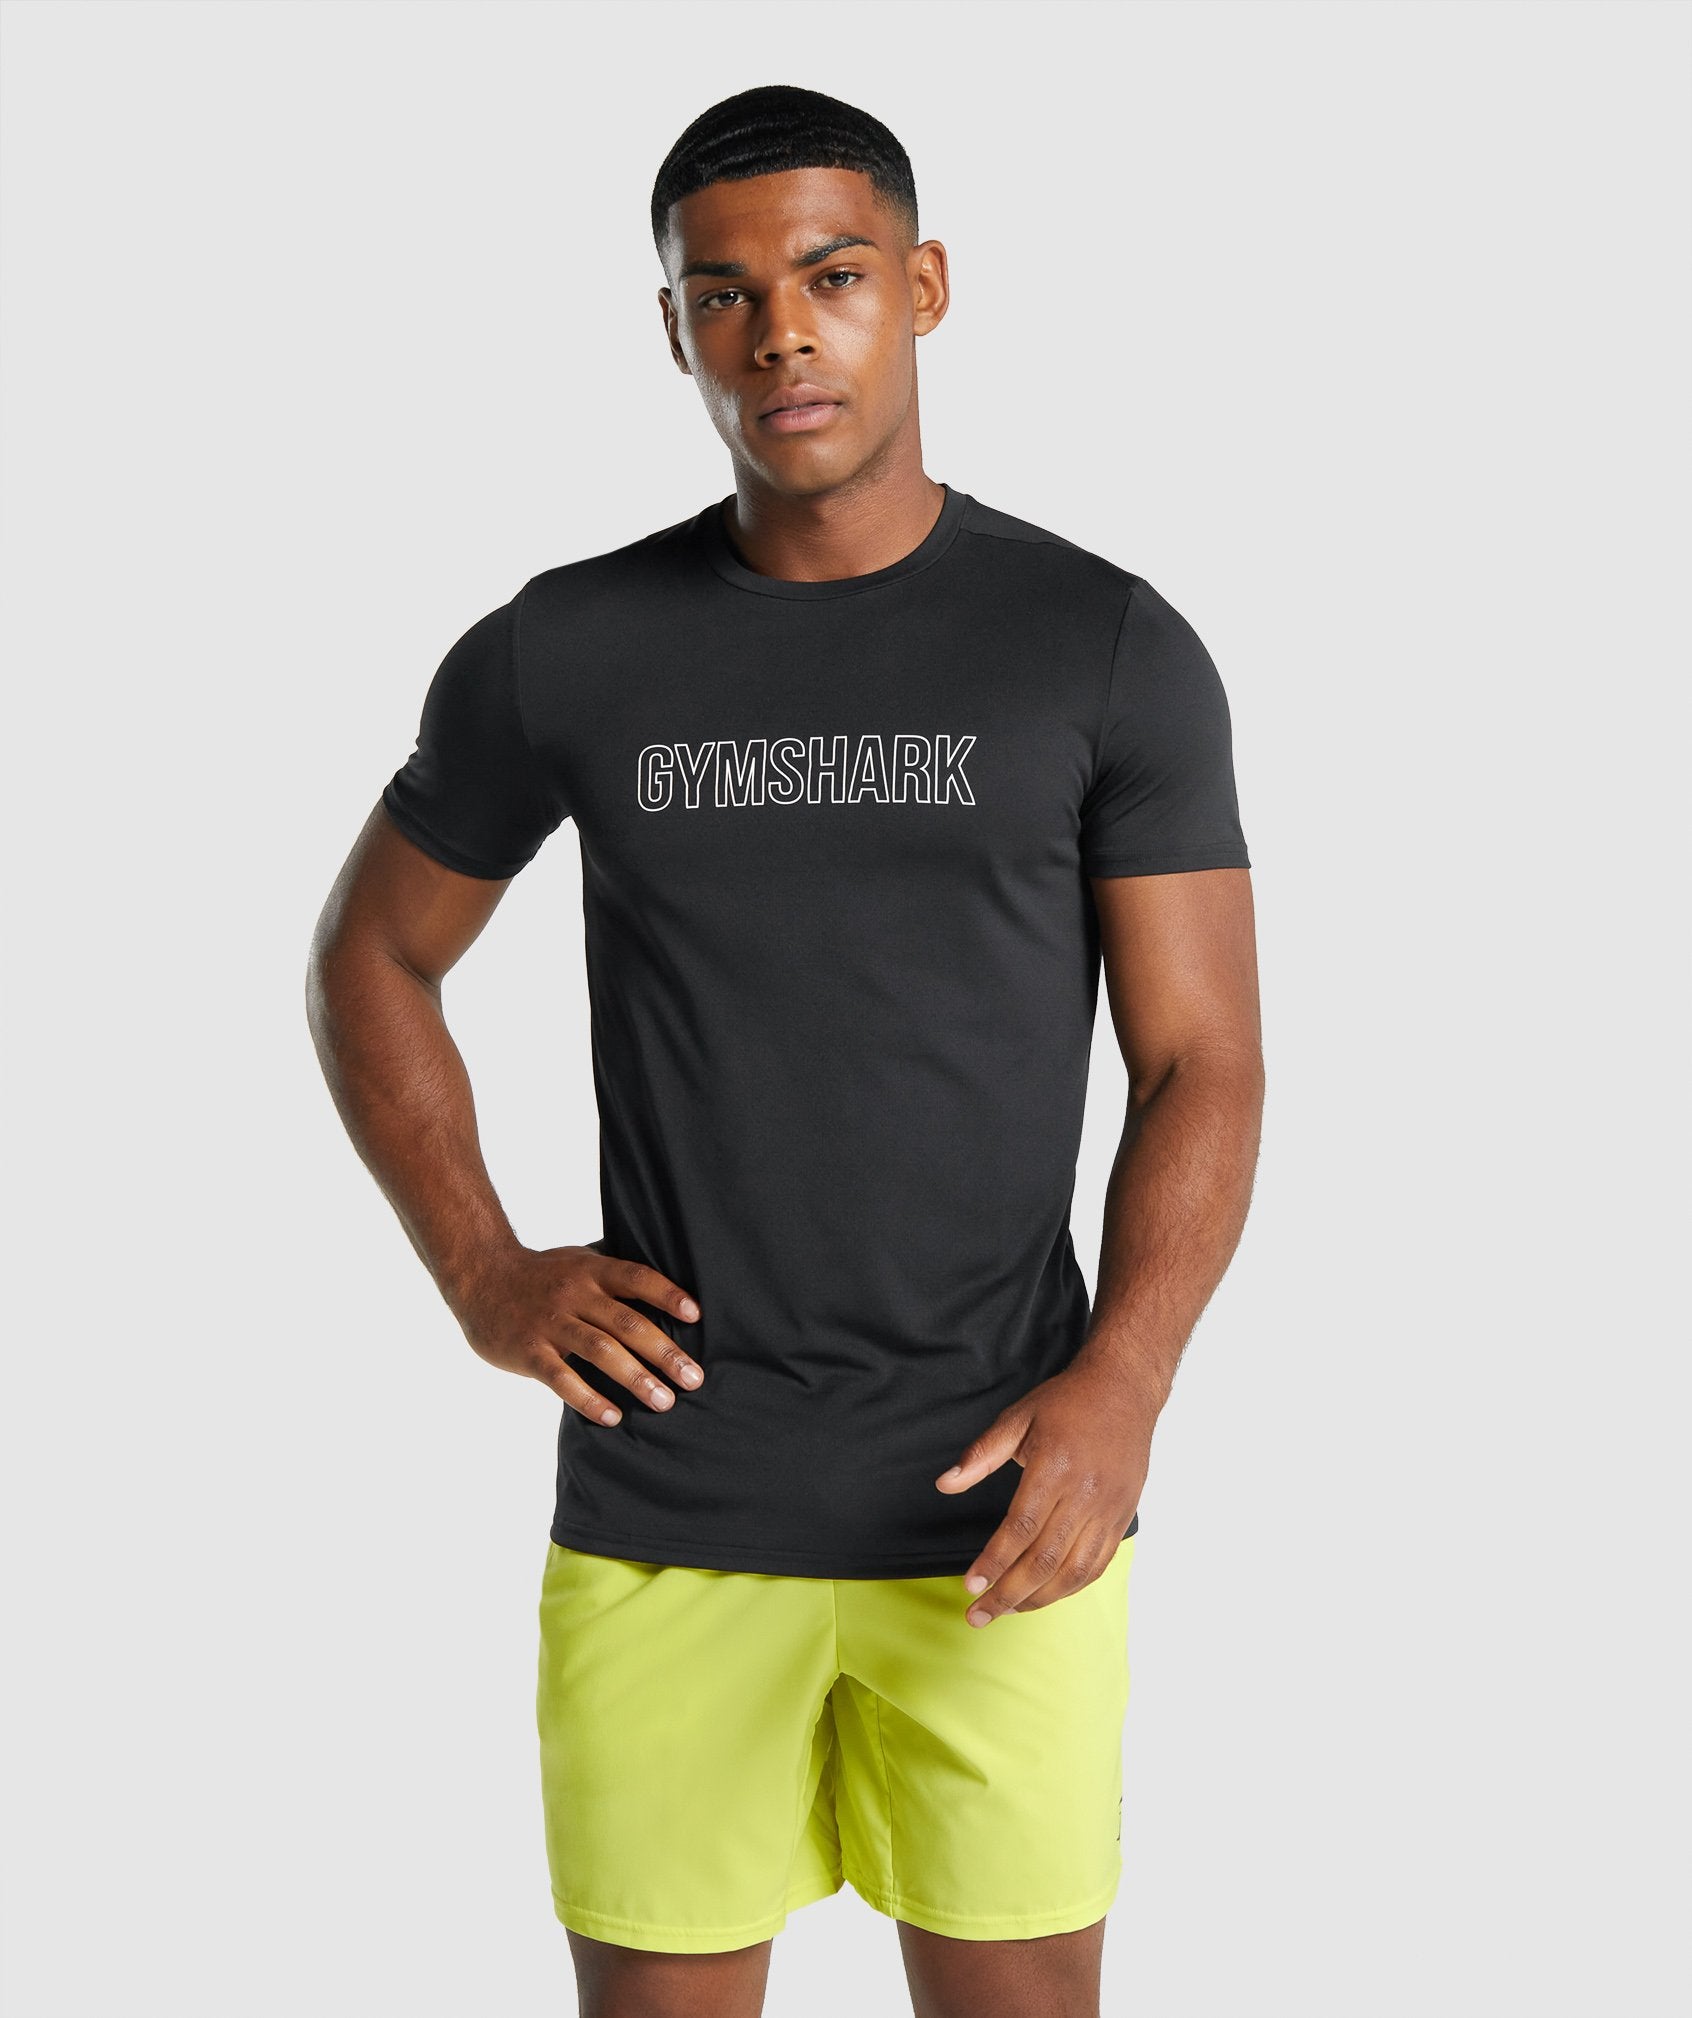 Gymshark Arrival Graphic T-Shirt - Black